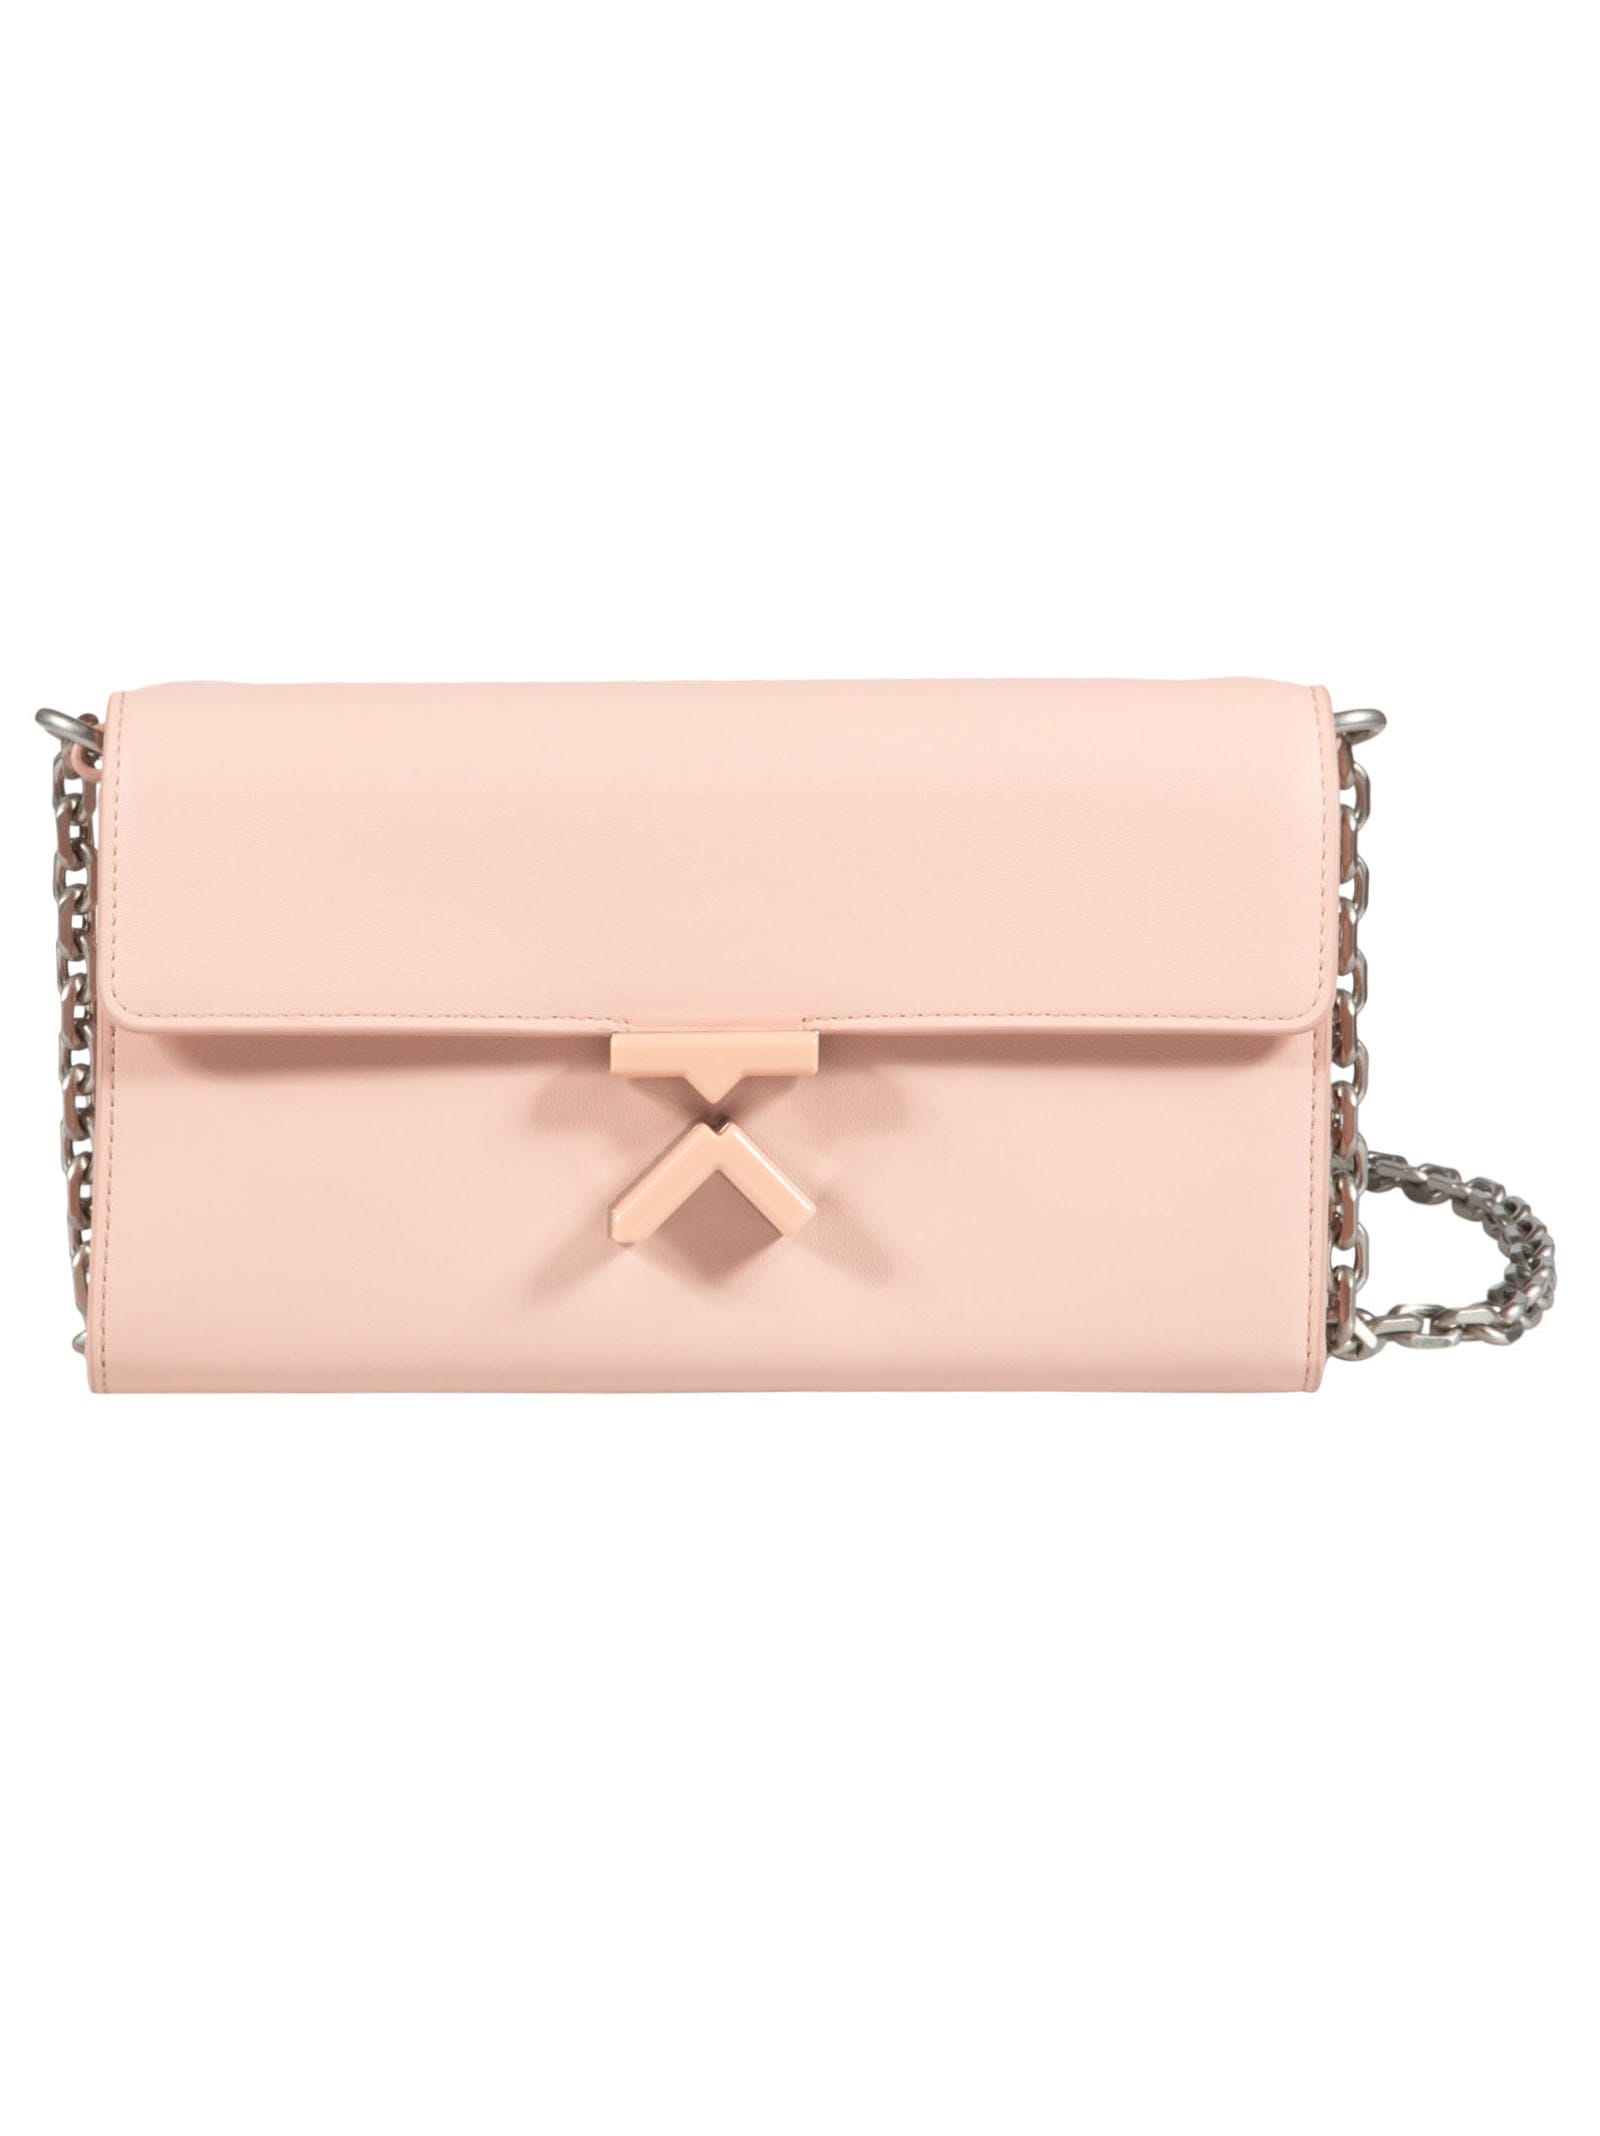 Kenzo Chain Strap Shoulder Bag In Pink